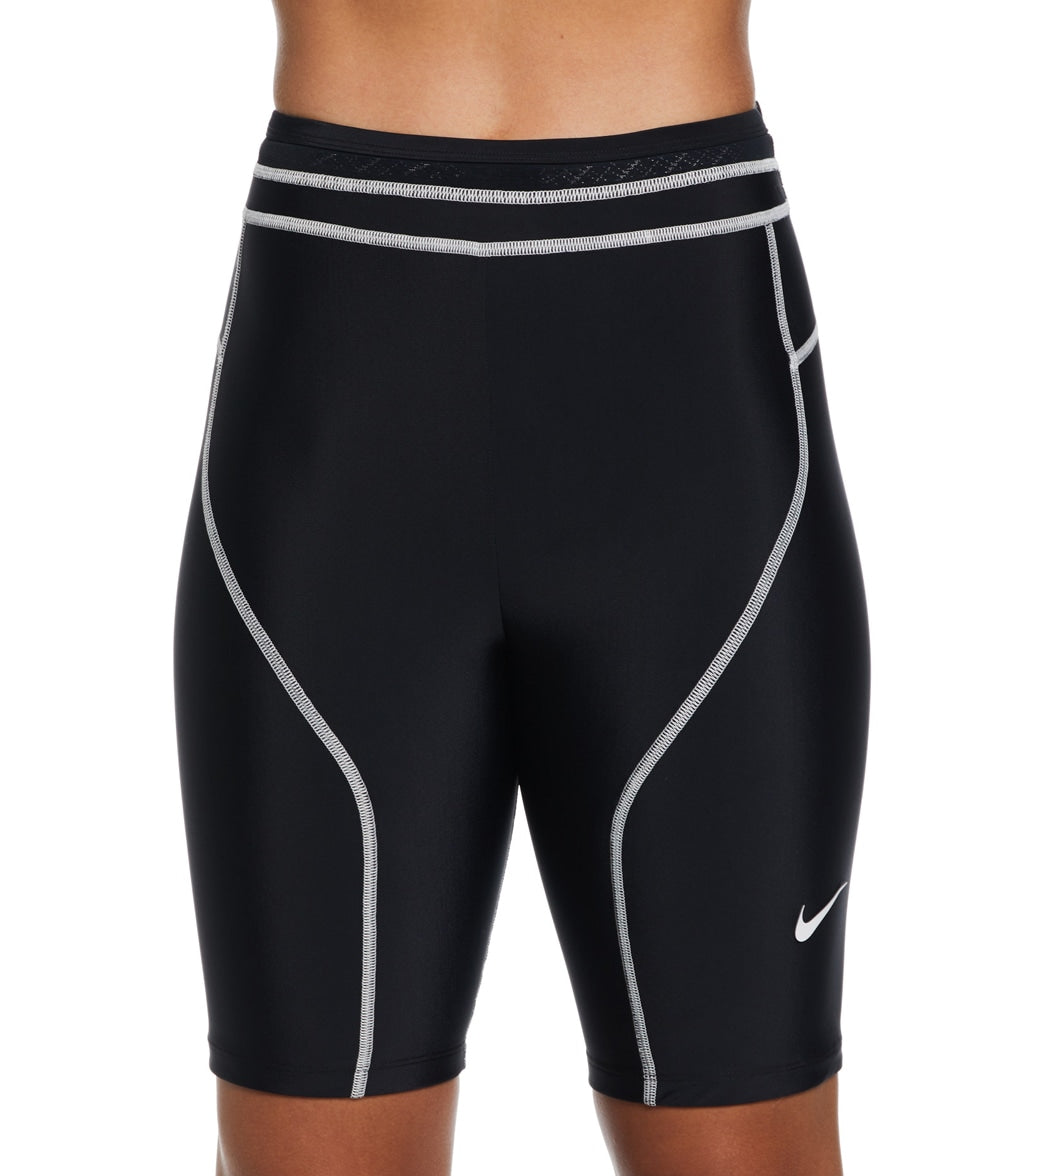 Nike Womens Solid Kick Short Bikini Bottom